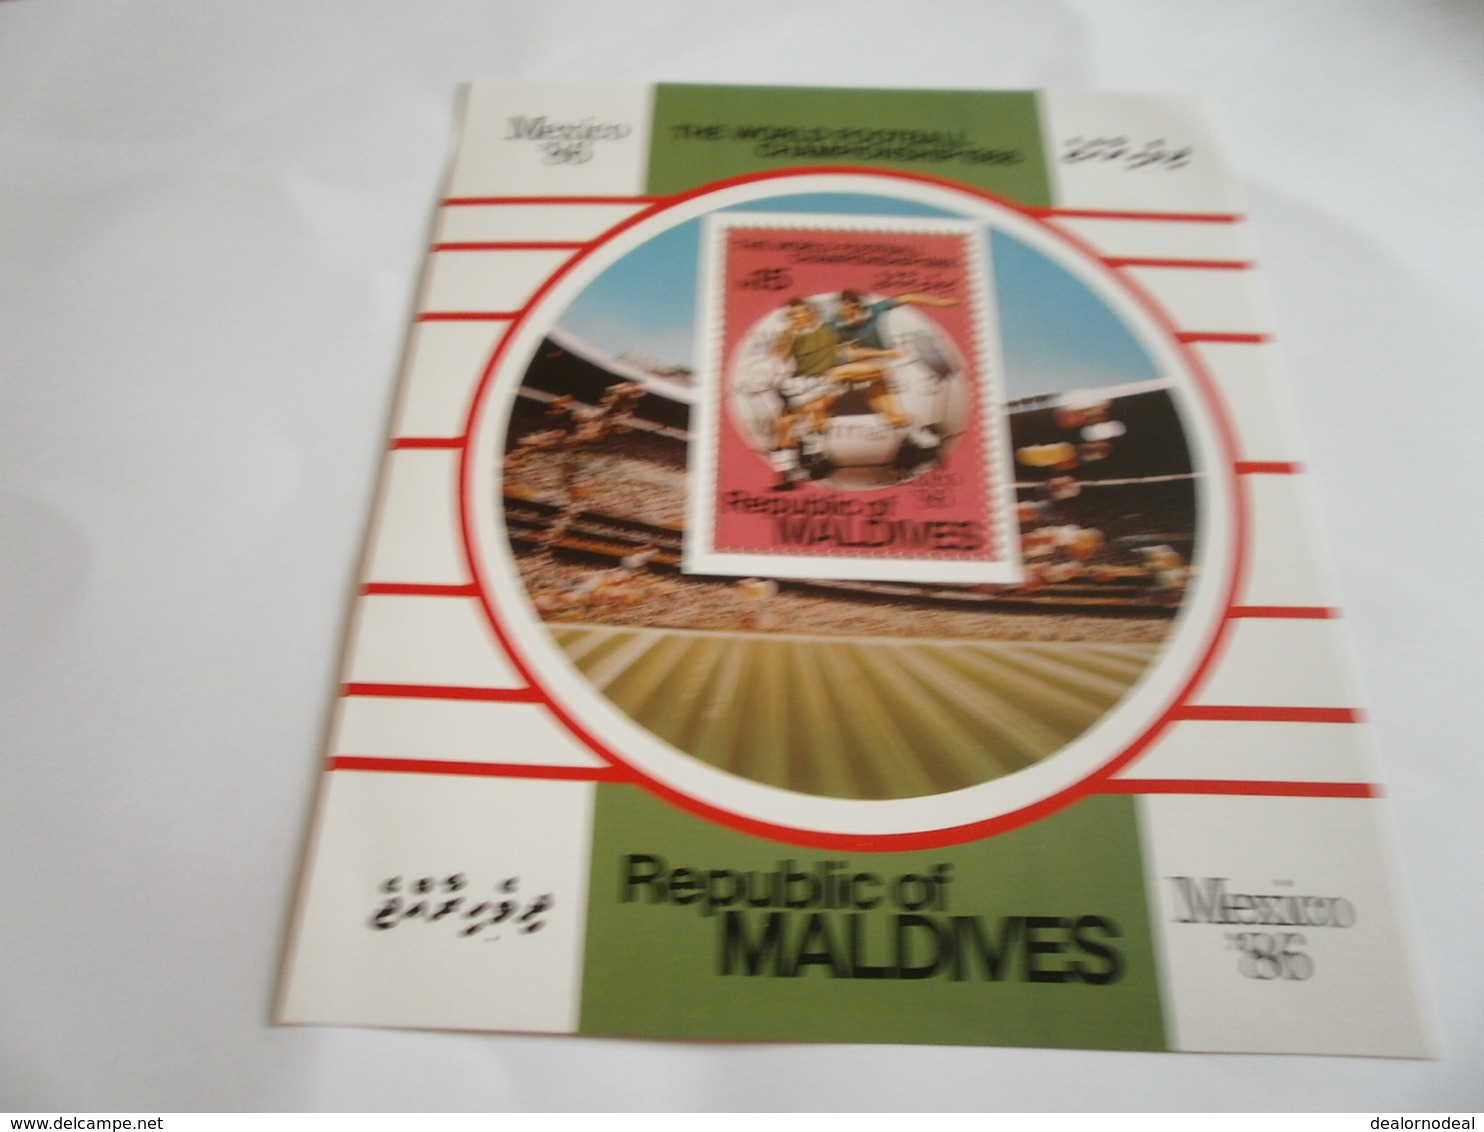 Miniature Sheet Perf Mexico Football World Cup 1986 - Maldives (1965-...)